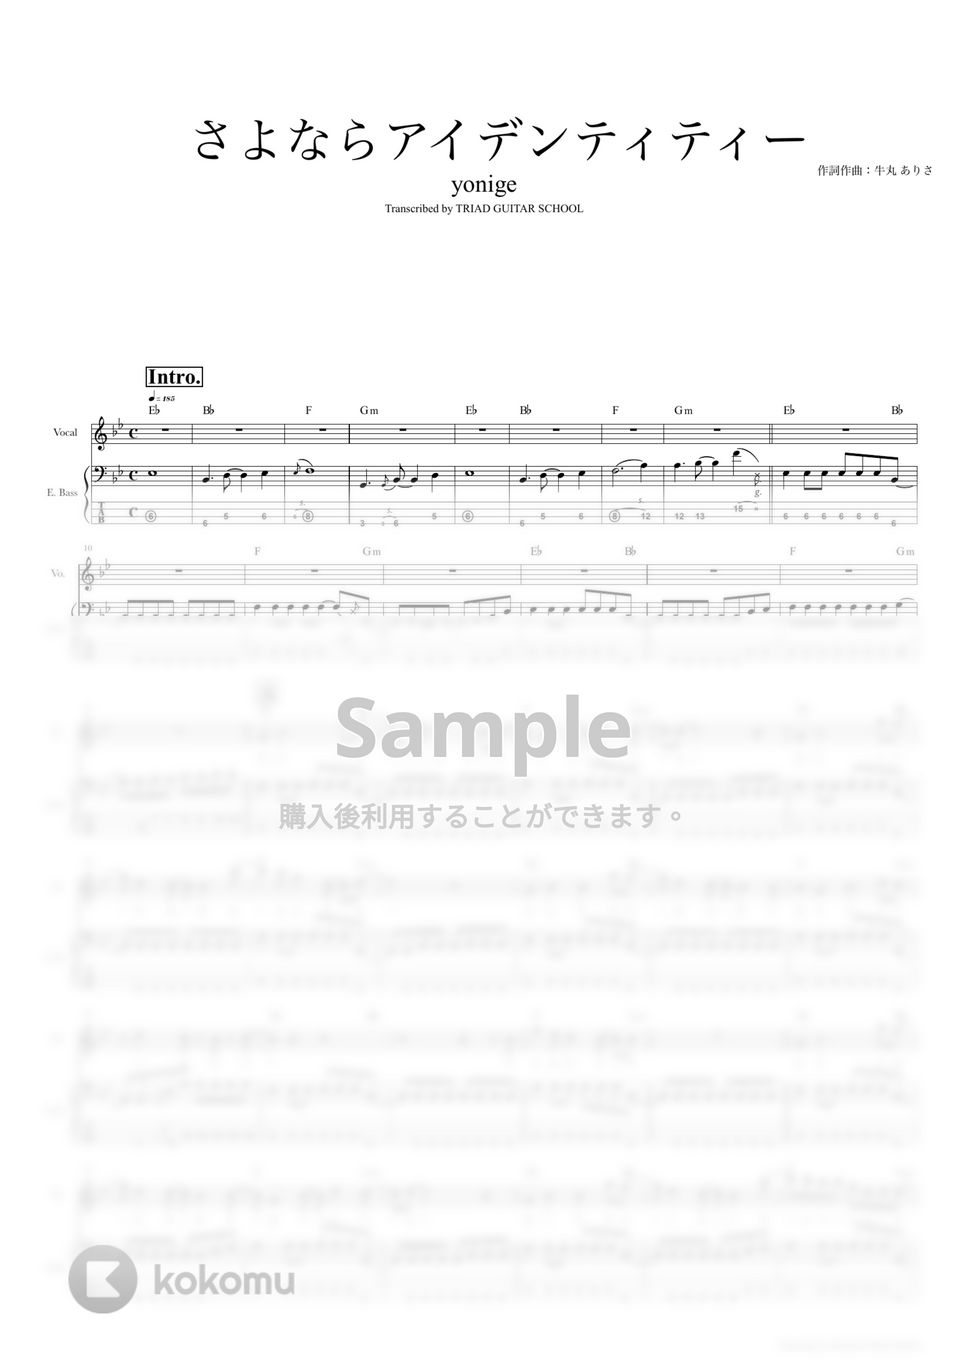 yonige - さよならアイデンティティー (ベーススコア・歌詞・コード付き) by TRIAD GUITAR SCHOOL